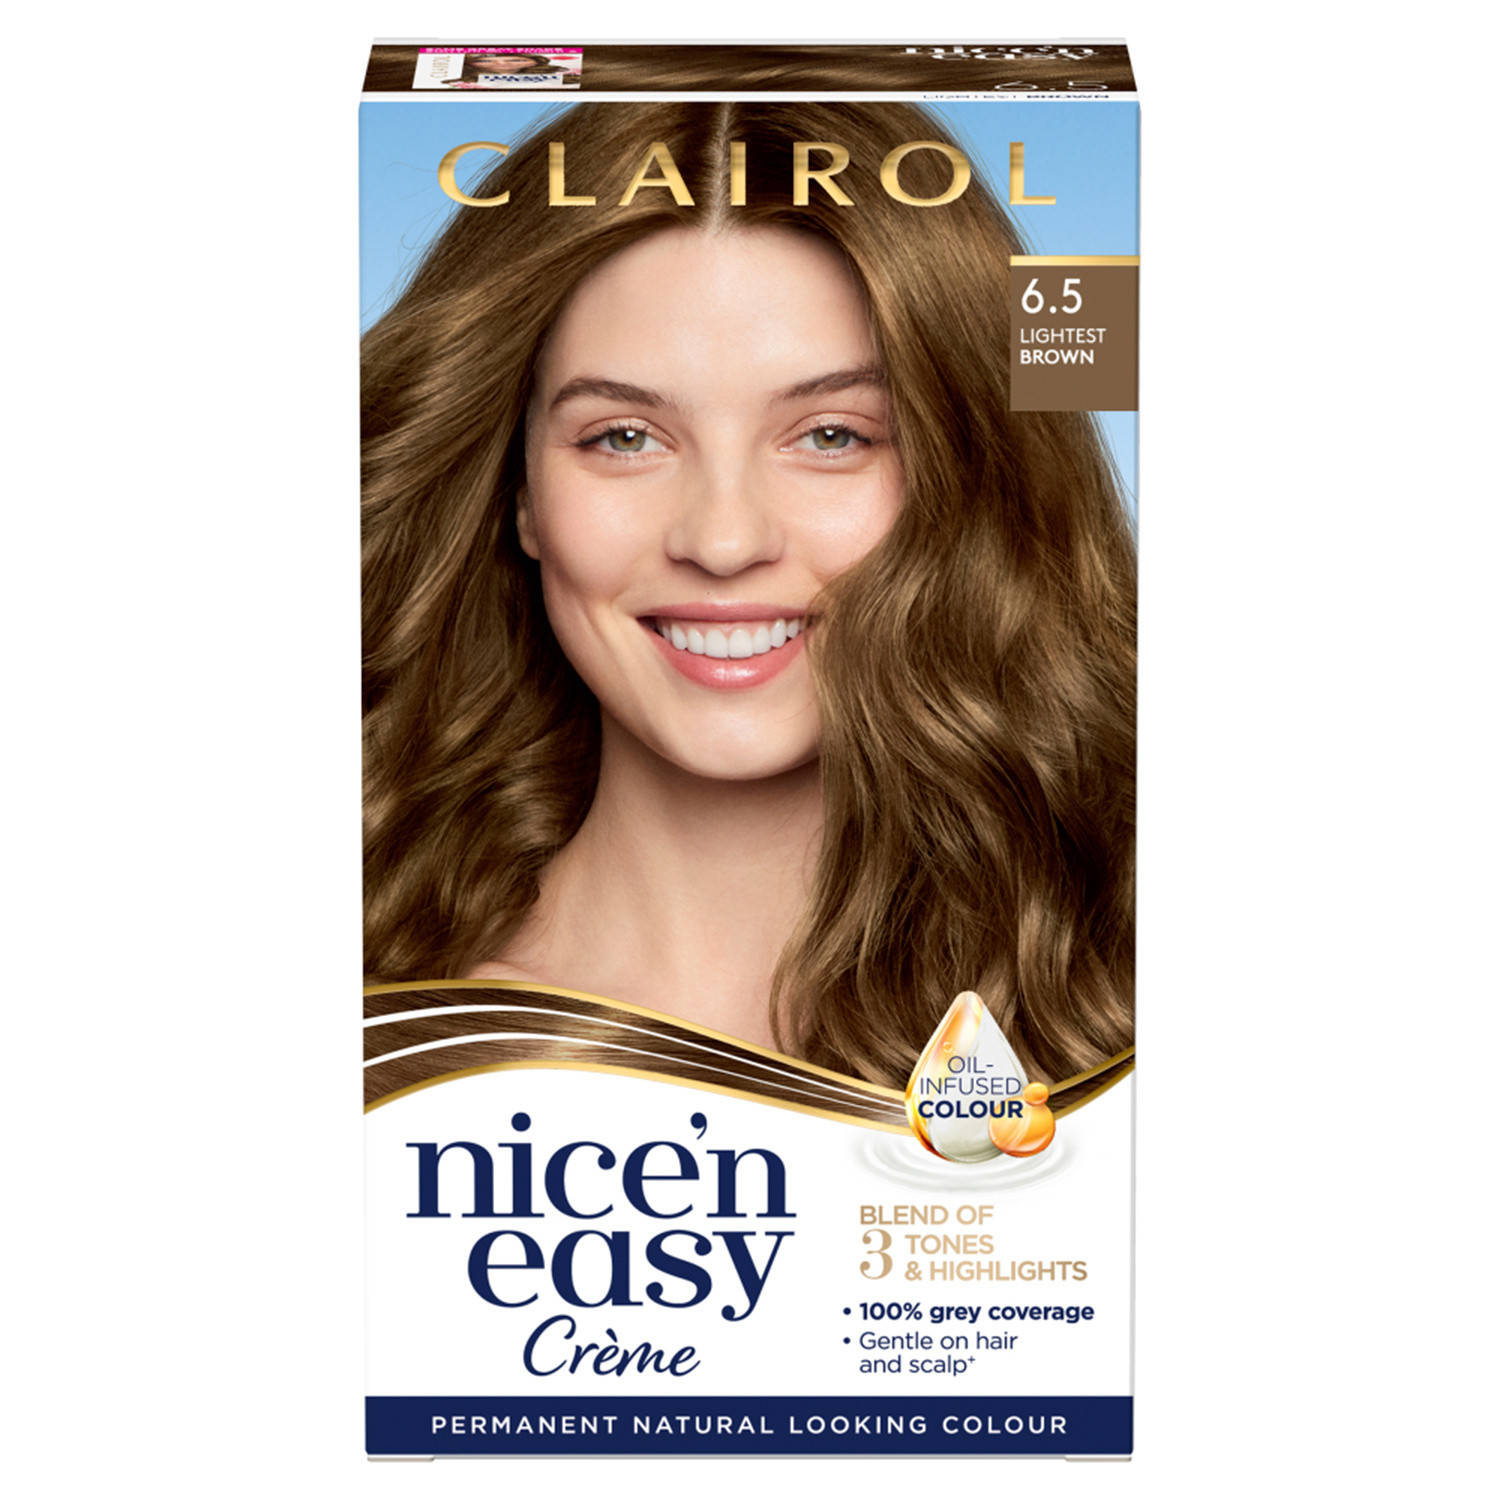 Clairol Nice' n Easy Crème Natural Looking Oil Infused Permanent Hair Dye 177ml (Various Shades) - 6.5 Lightest Brown